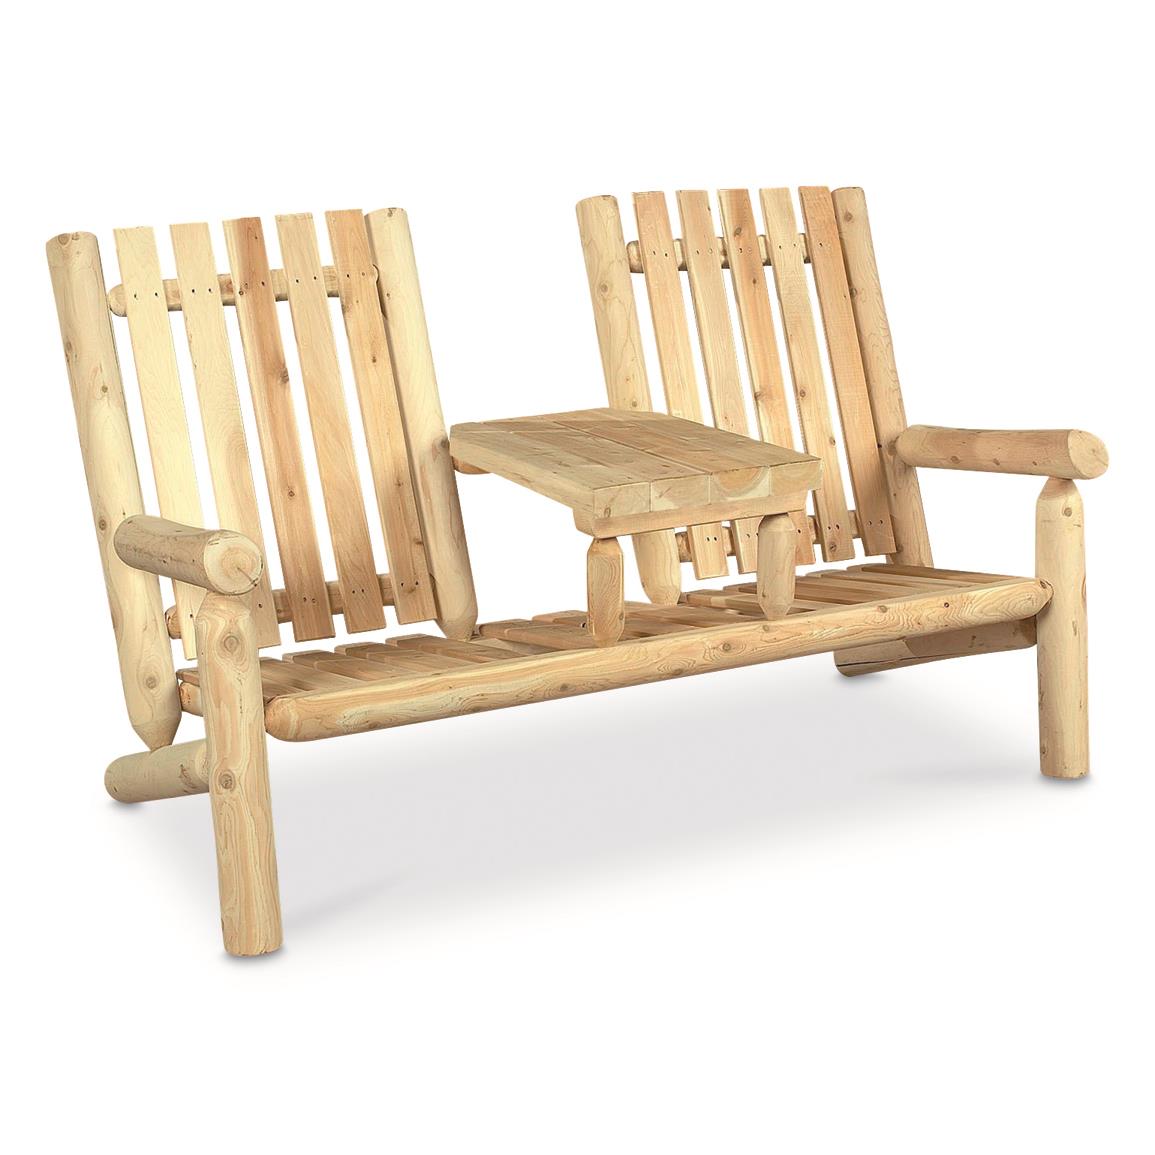 Rustic Natural Cedar Furniture Company Cedar Log Garden Loveseat